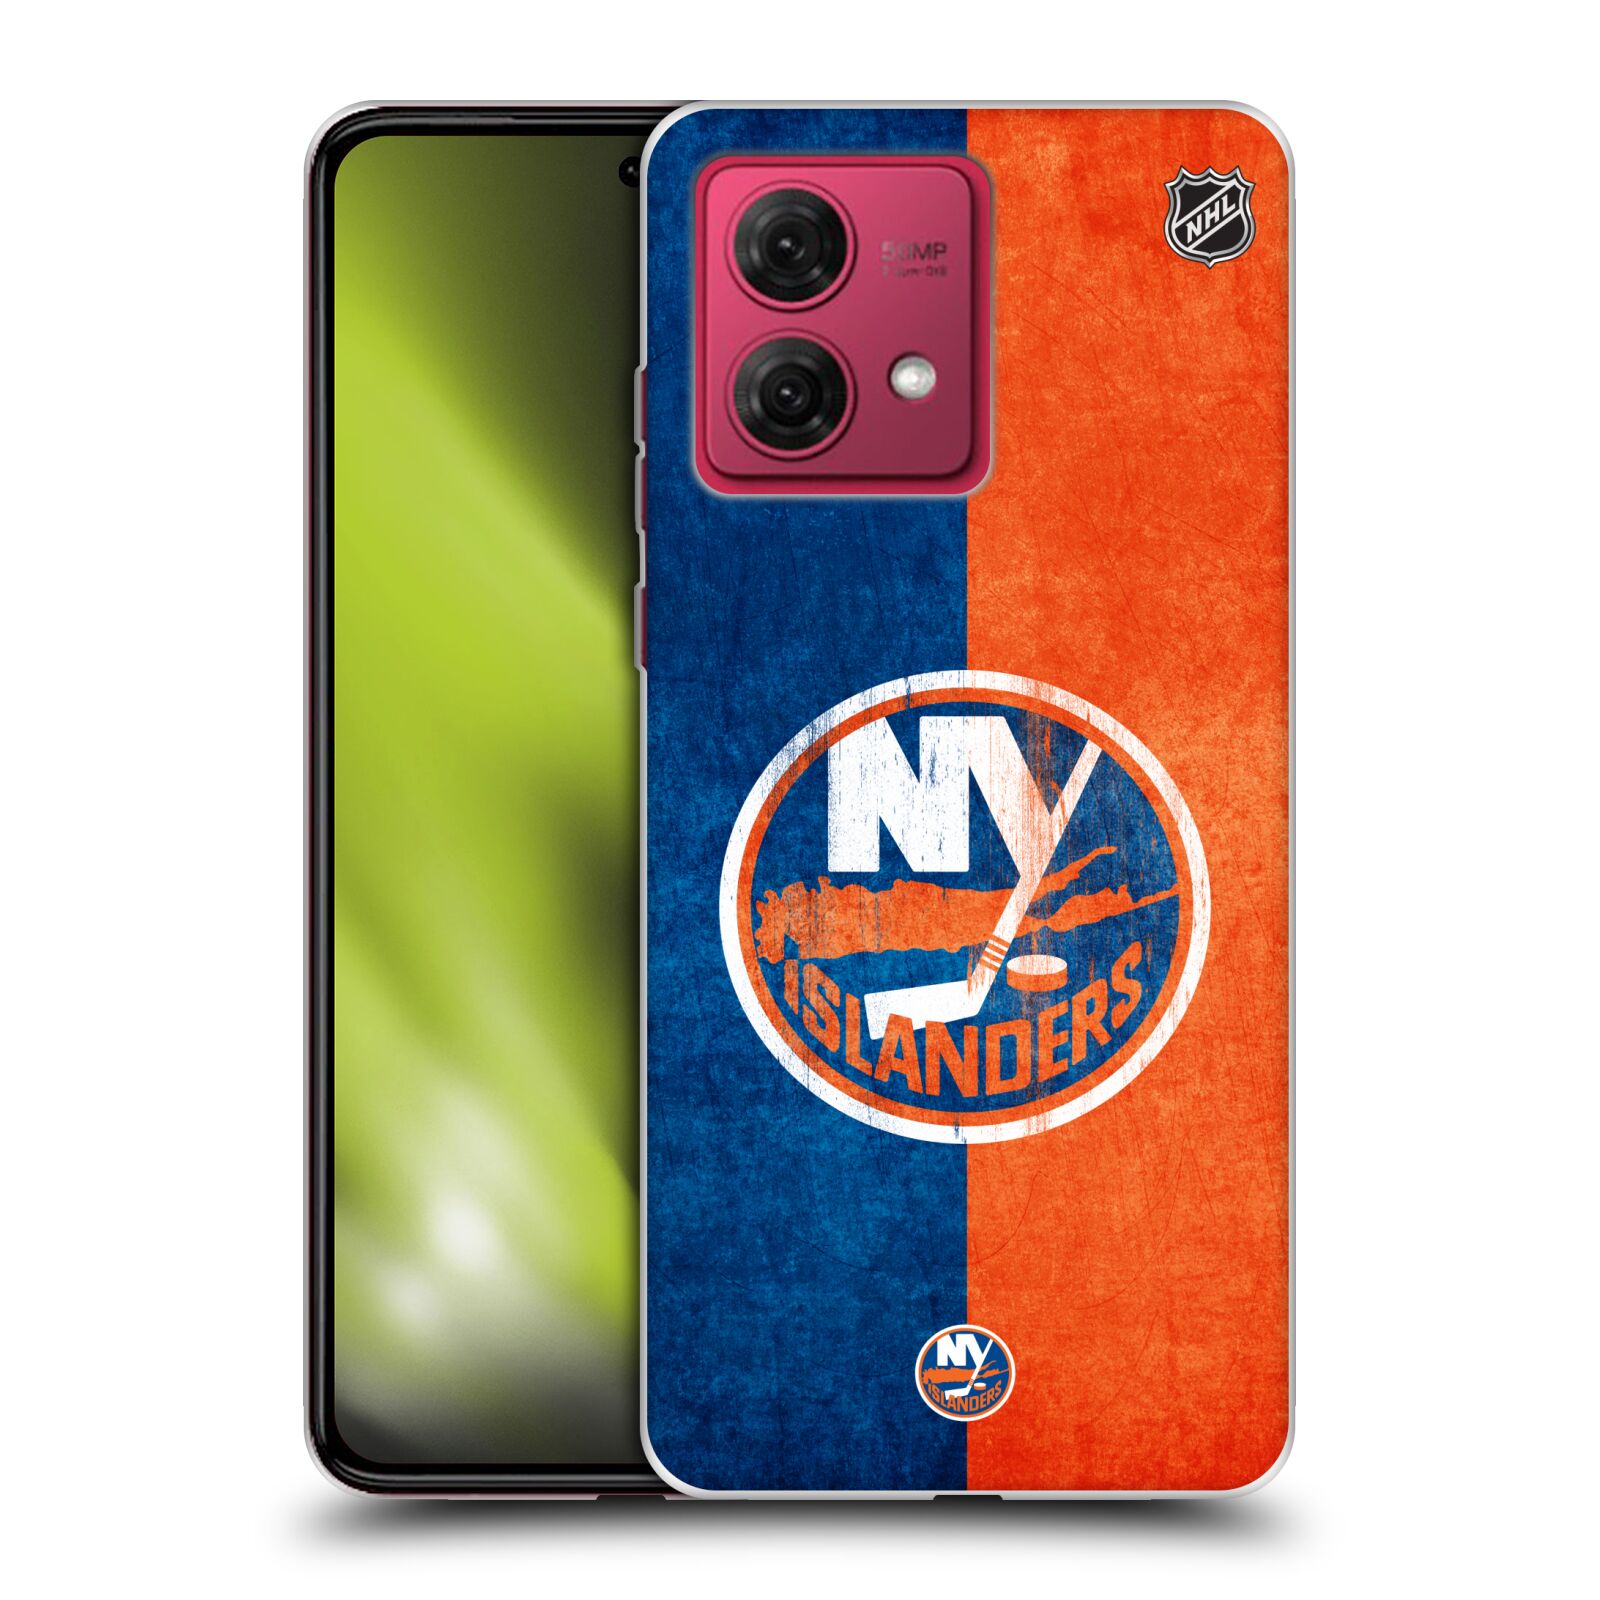 Silikonové pouzdro na mobil Motorola Moto G84 5G - NHL - Půlené logo New York Islanders (Silikonový kryt, obal, pouzdro na mobilní telefon Motorola Moto G84 5G s licencovaným motivem NHL - Půlené logo New York Islanders)